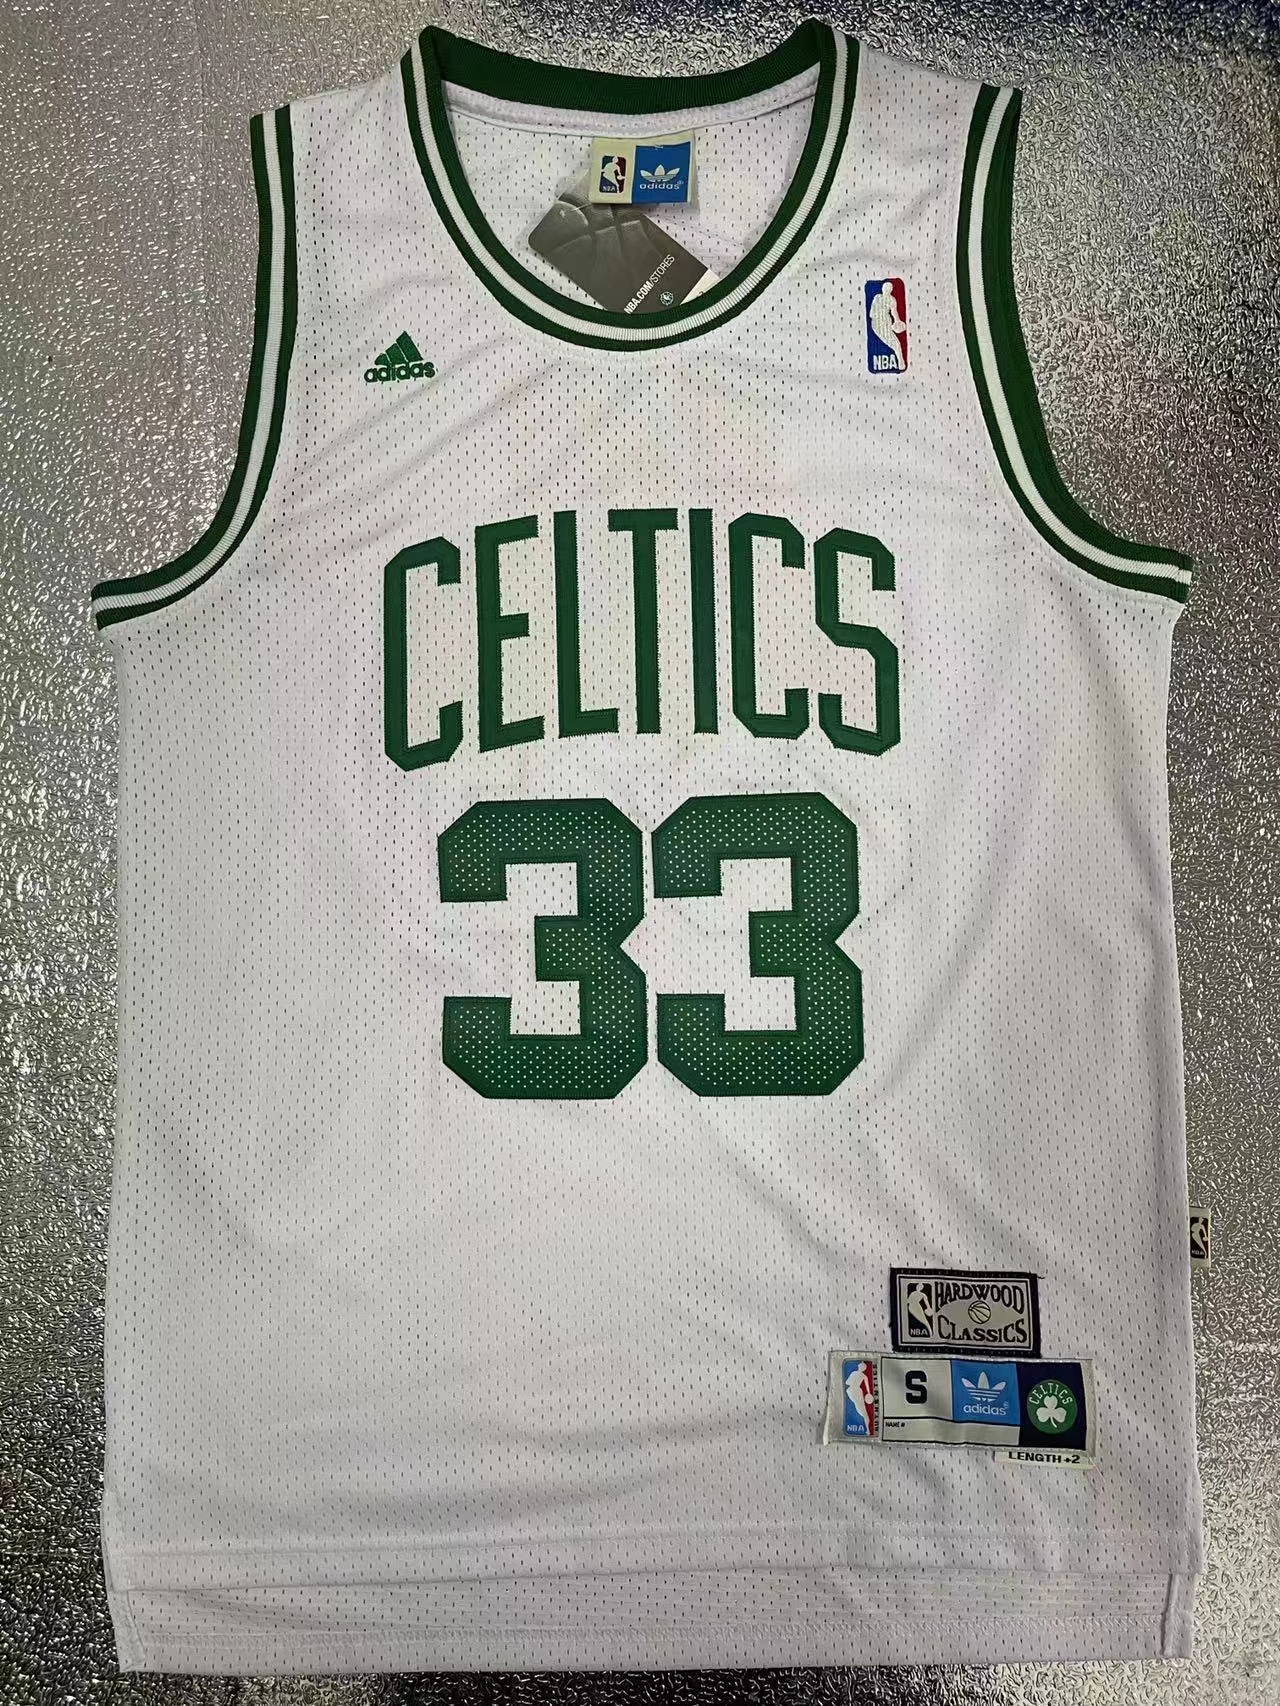 Boston Celtics Jersey #5 Garnett Green Shirt Size XS NBA USA